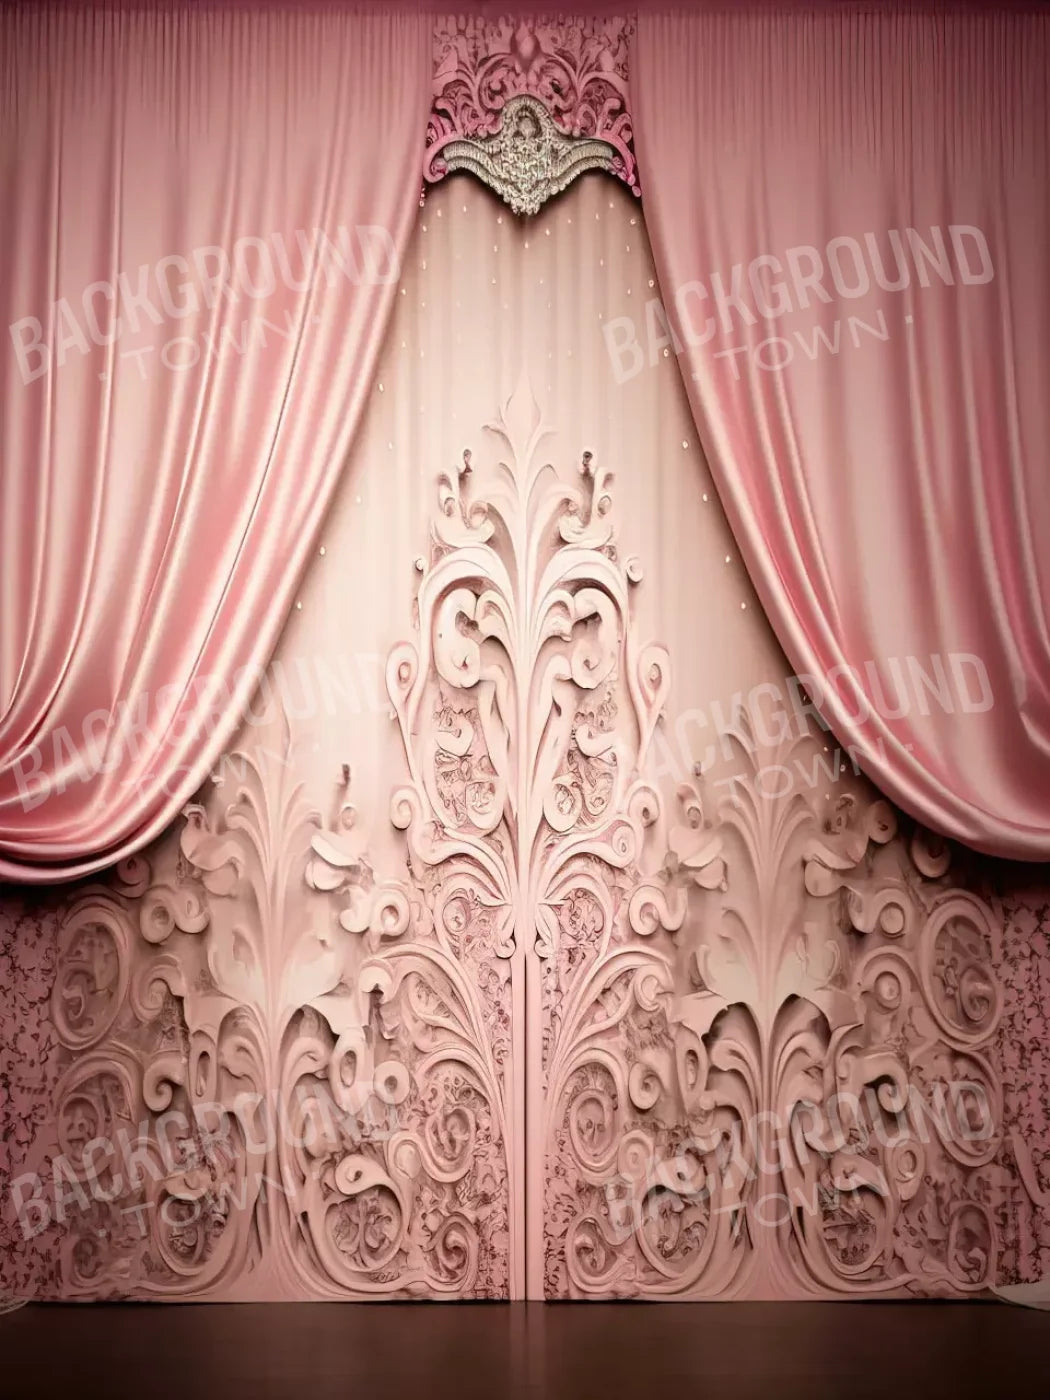 Doll House Curtains Ii 6’X8’ Fleece (72 X 96 Inch) Backdrop